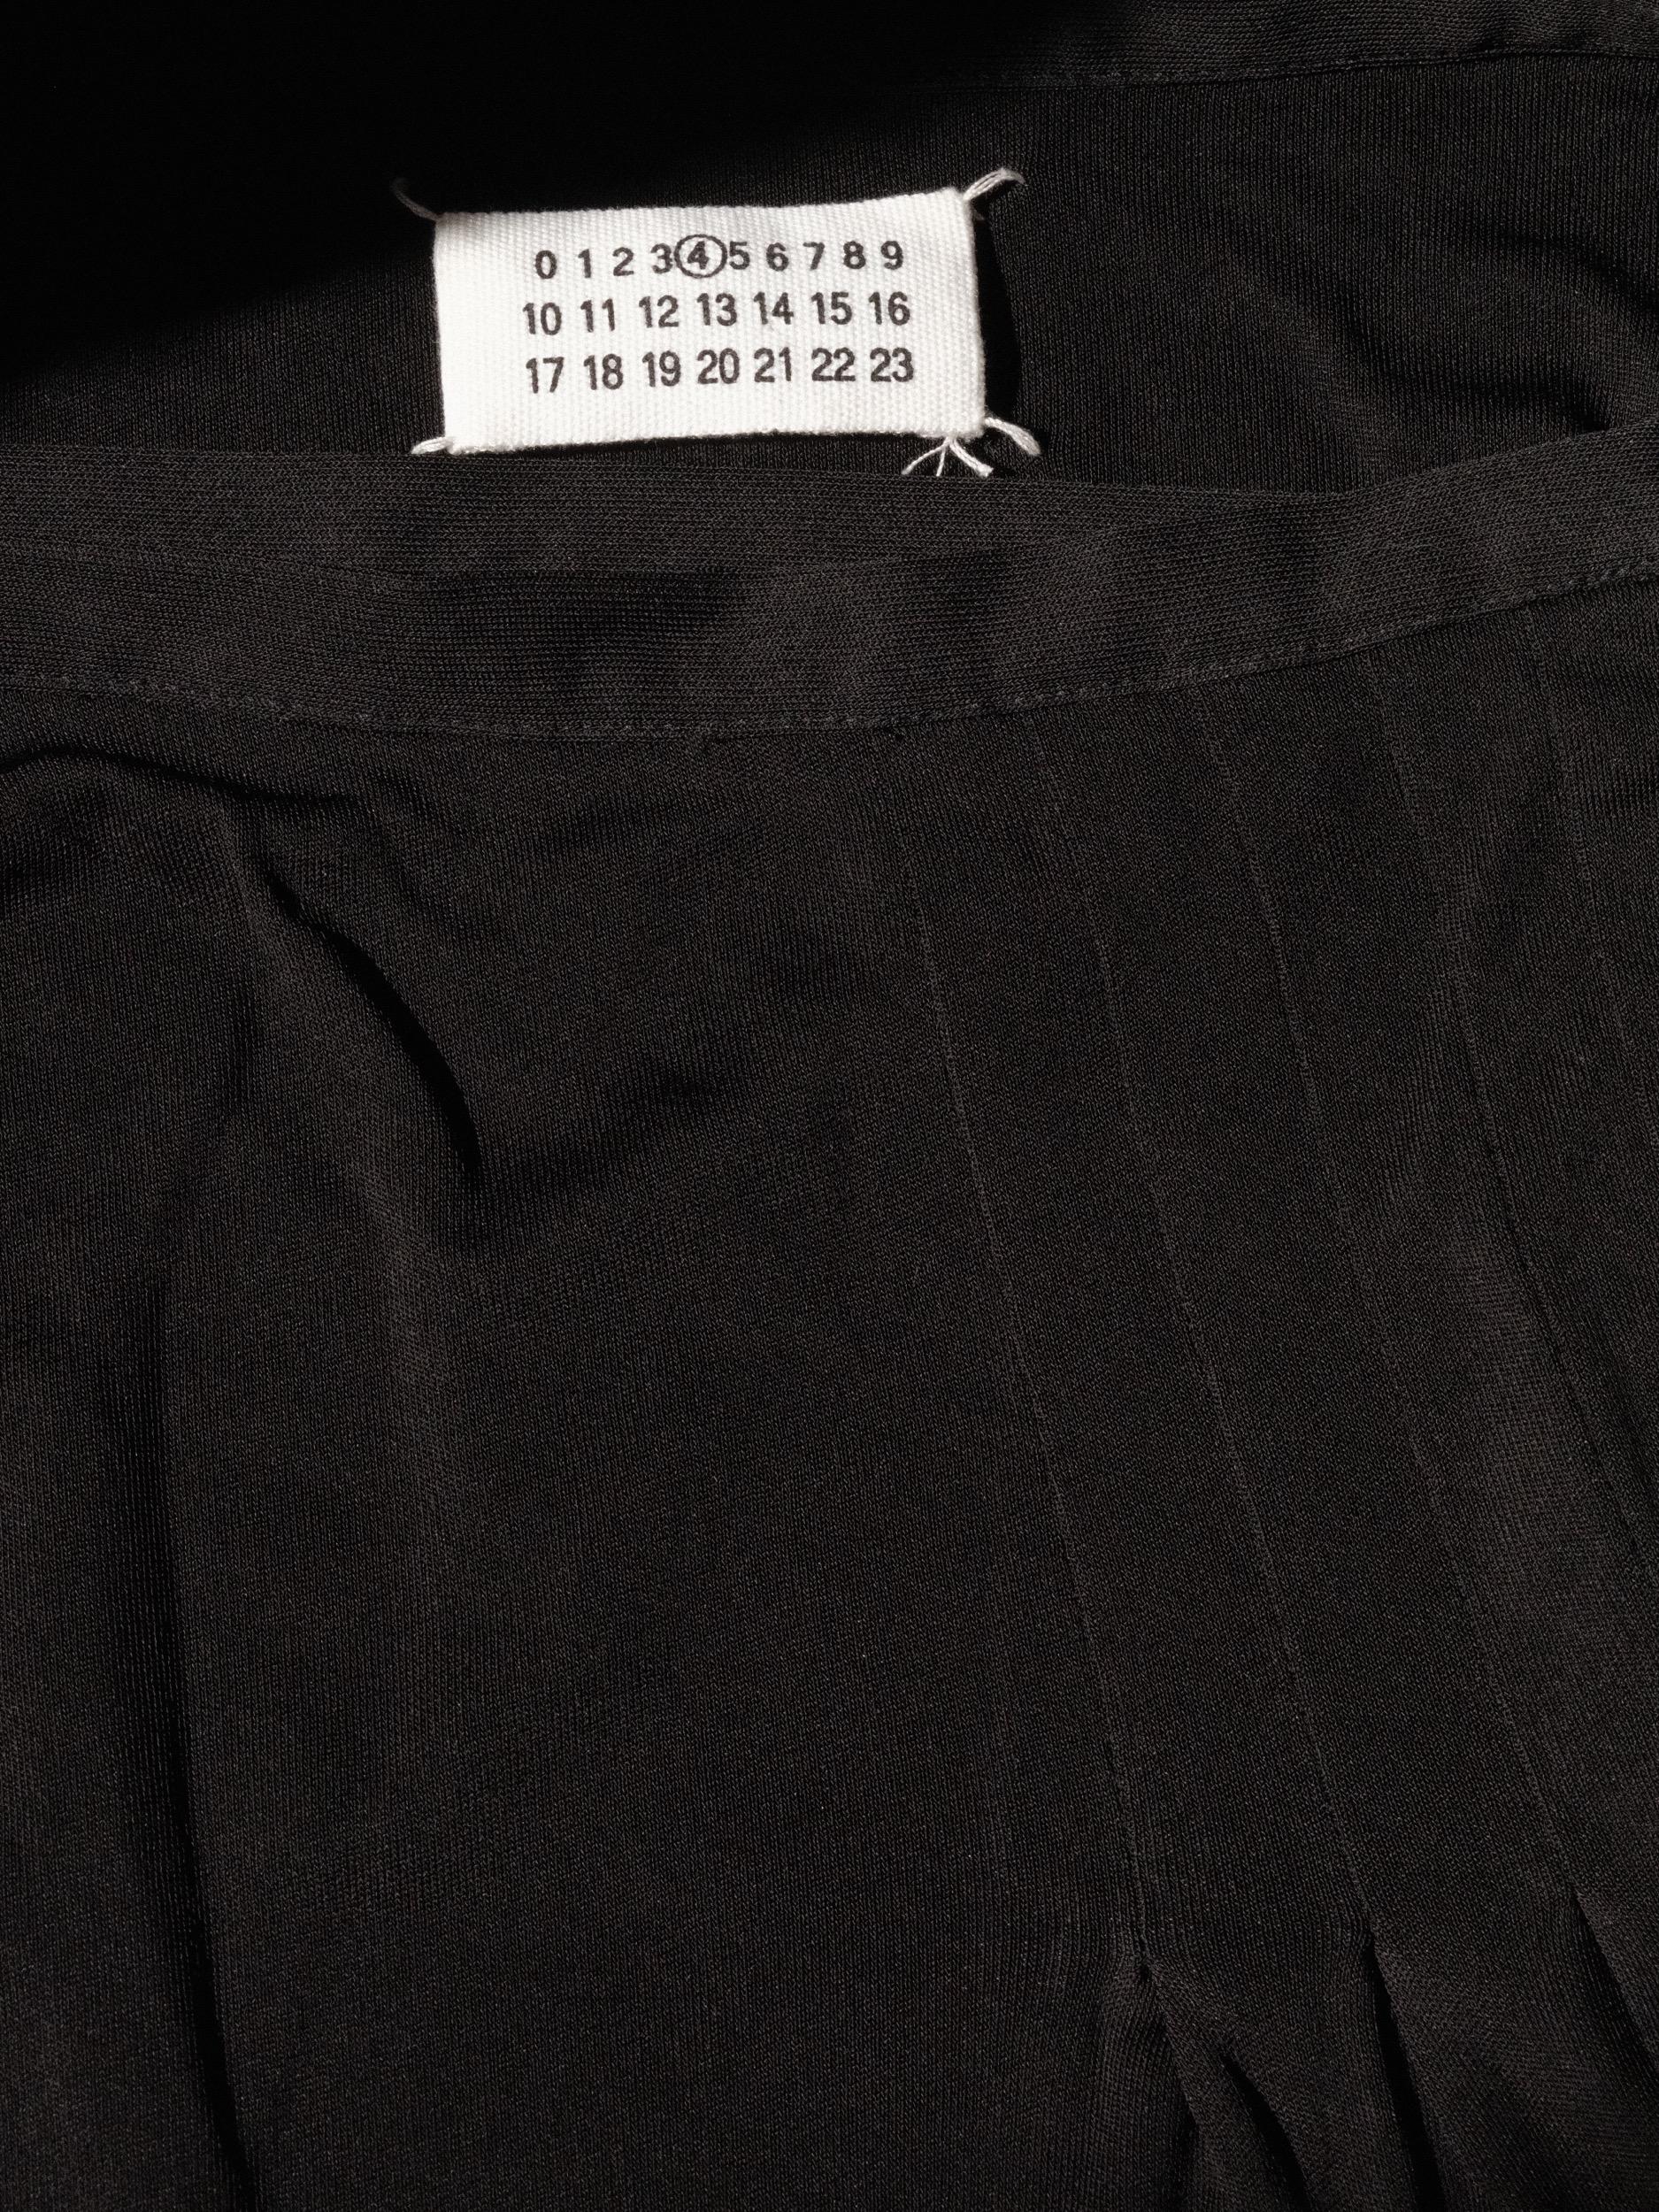 Margiela Wrap Skirt Black Line 4 Medium/One Size For Sale 3